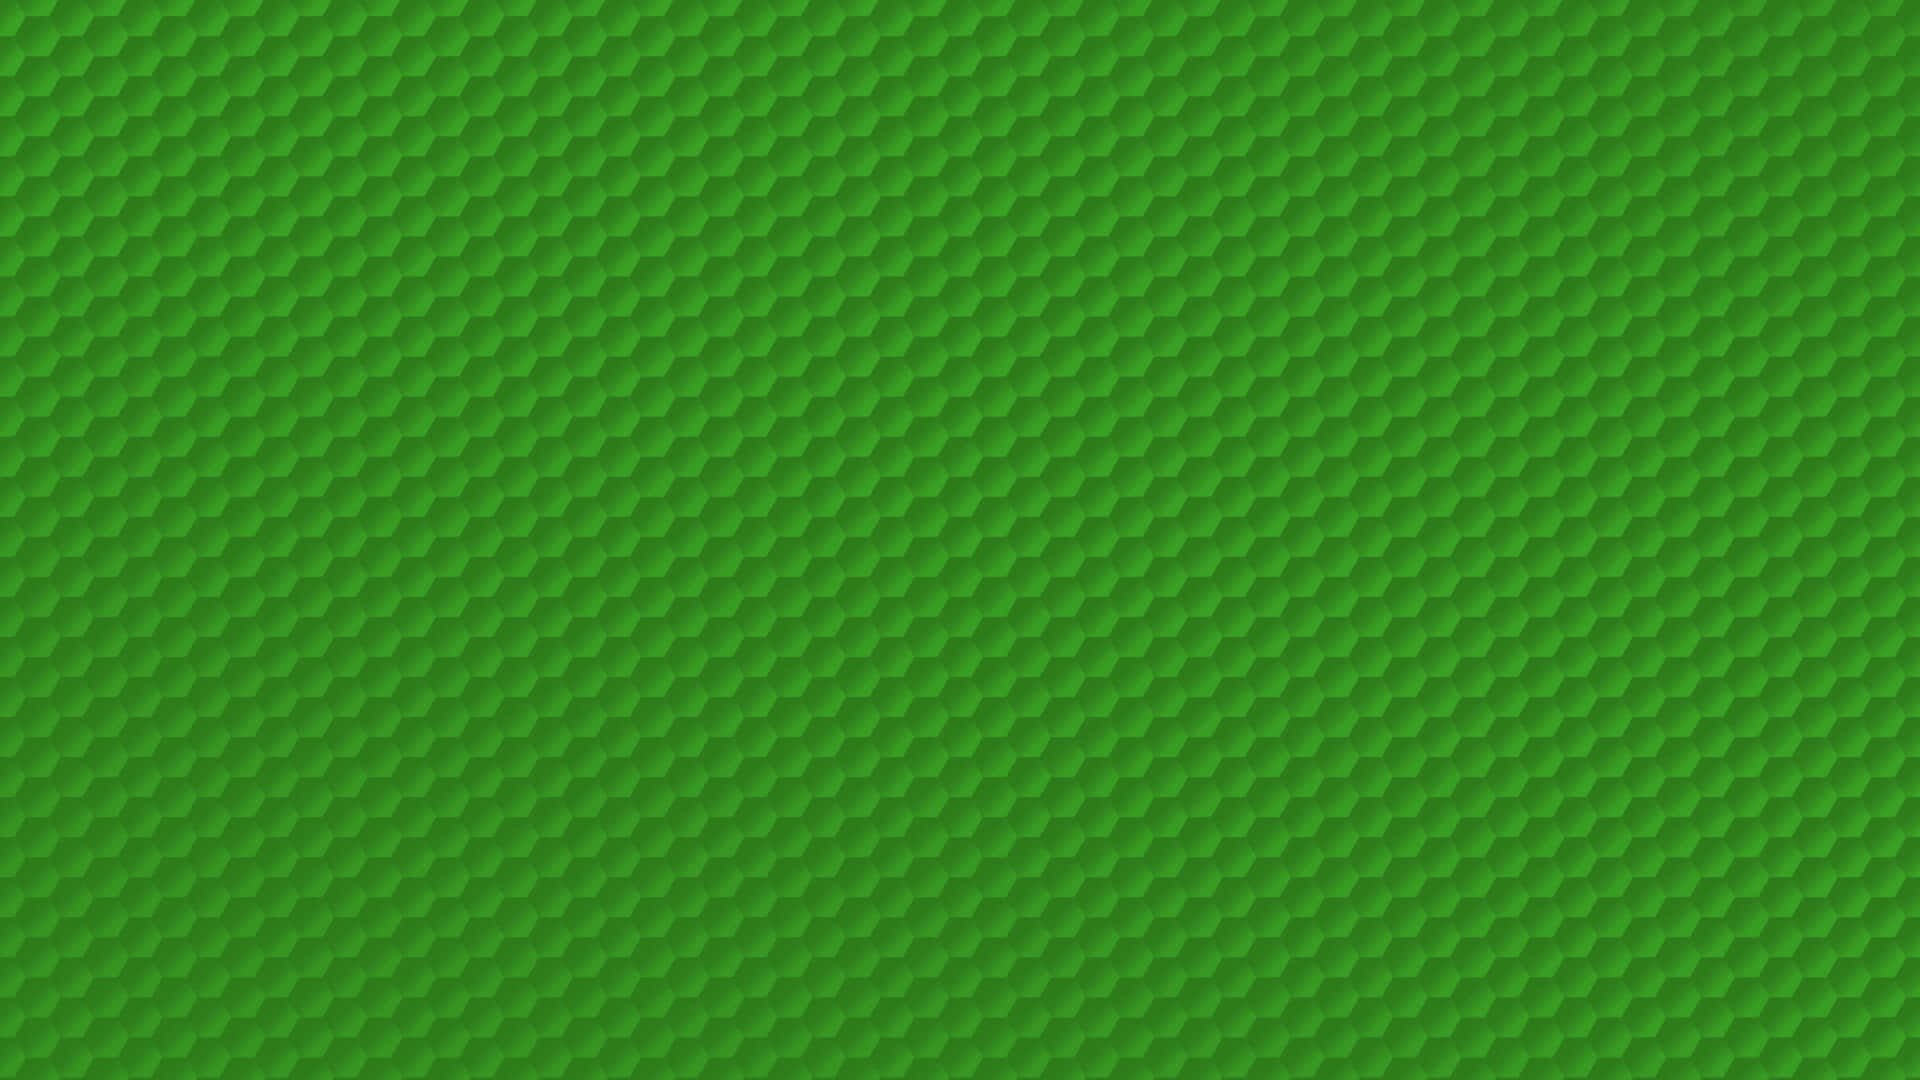 Chroma Green Infinity Vinyl Green Texture Background